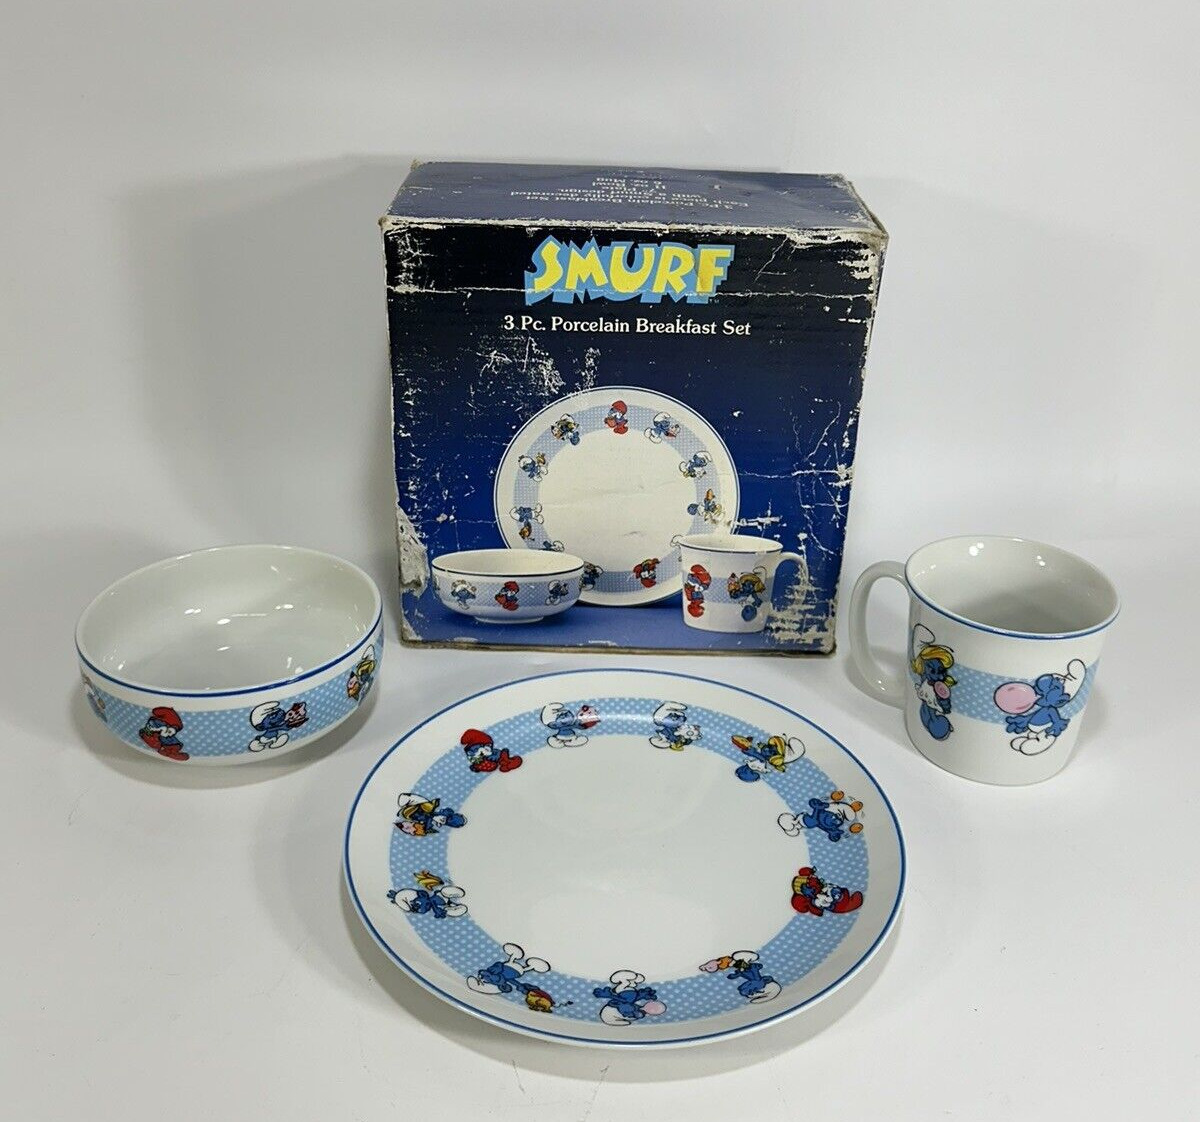 Vintage 1980's Smurf 3 pc. Porcelain Breakfast Set ~ Wallace Berrie ~ Japan Made